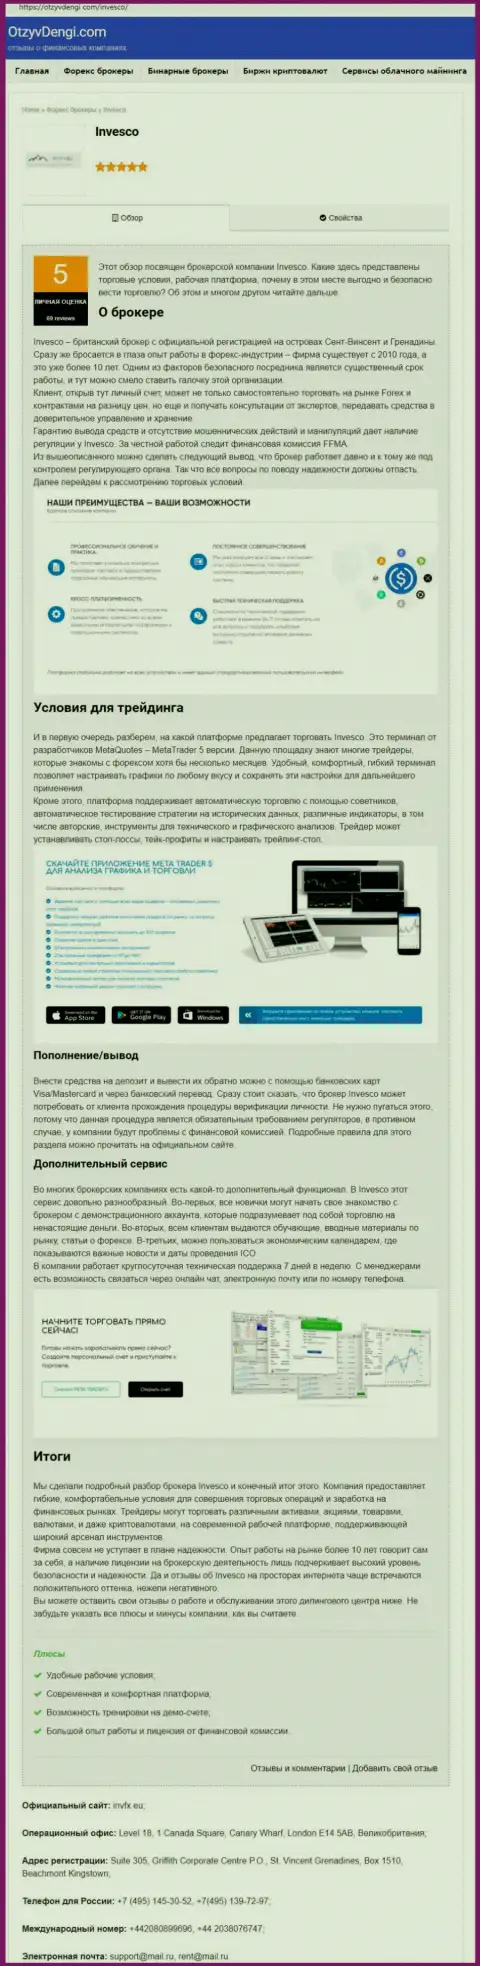 Сайт otzyvdengi com разместил публикацию о форекс дилере Invesco Limited